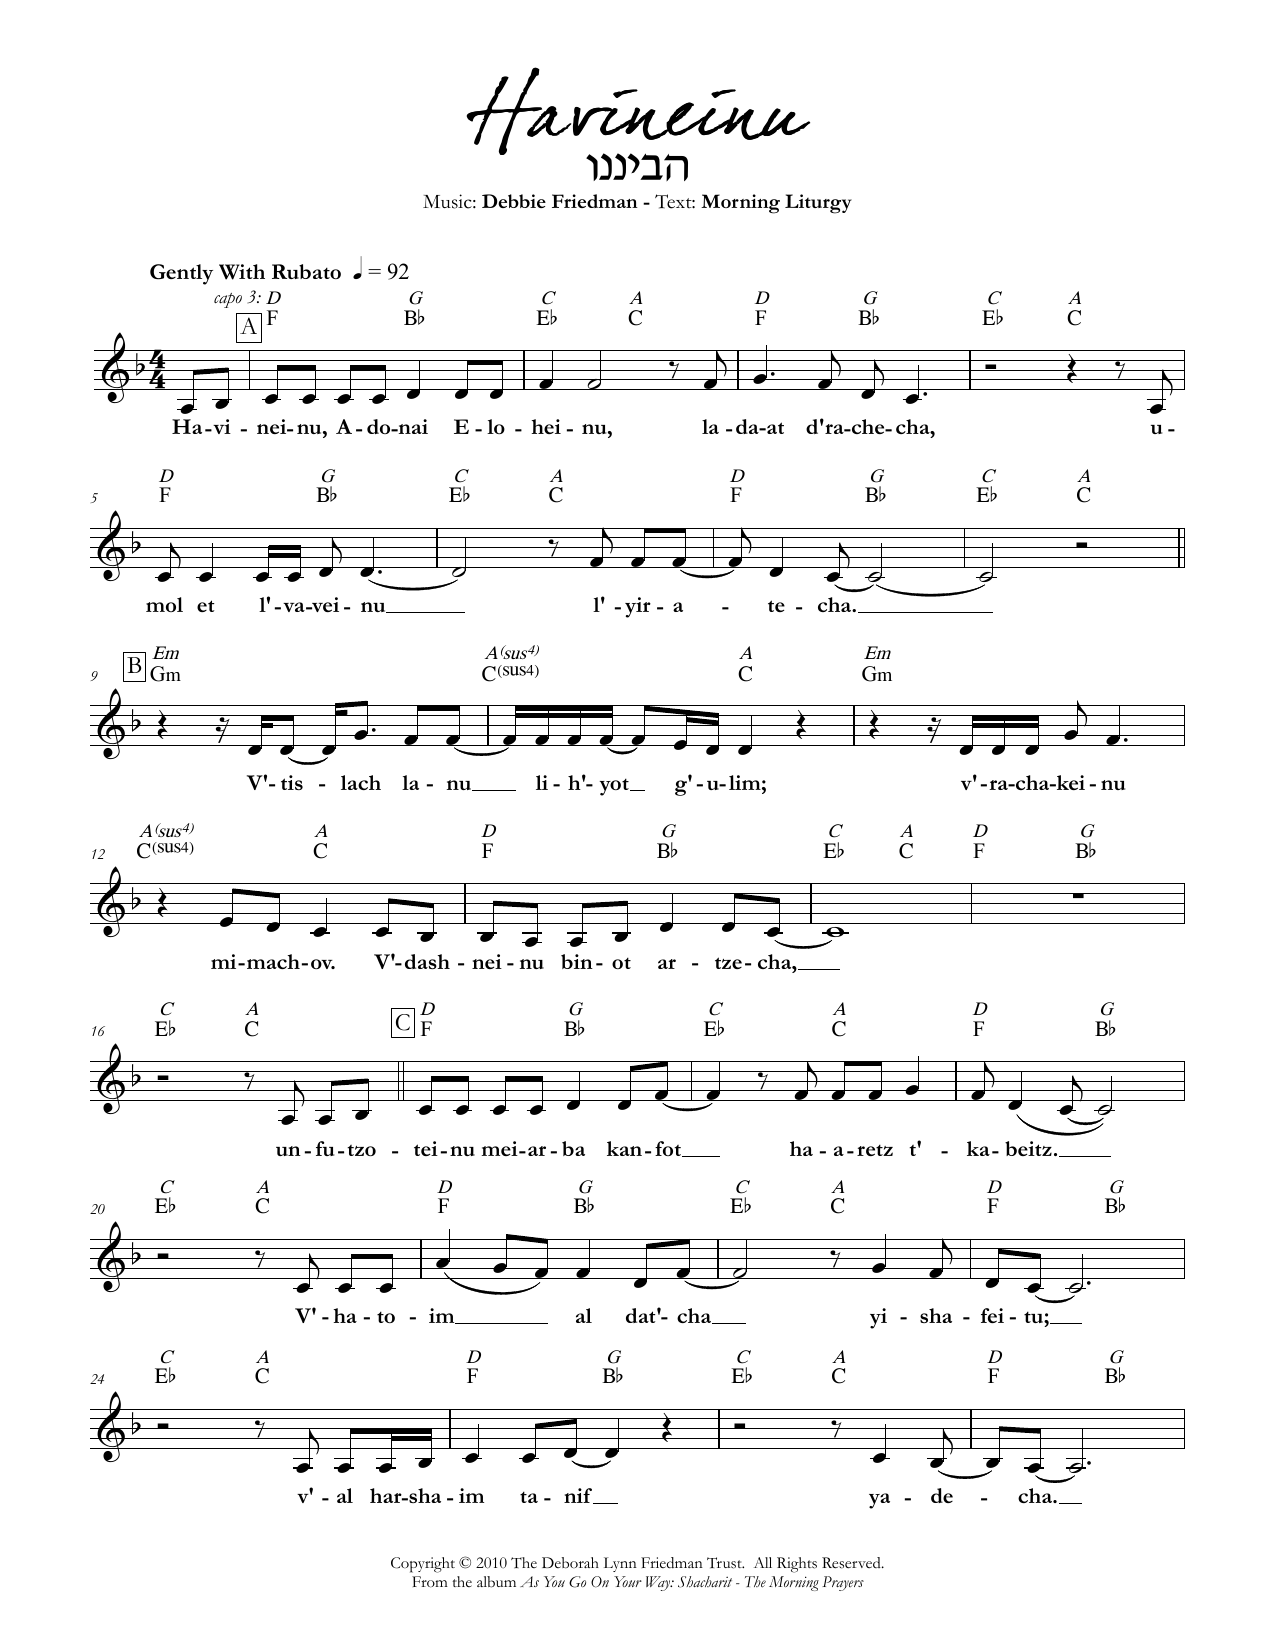 Debbie Friedman Havineinu sheet music notes and chords arranged for Lead Sheet / Fake Book